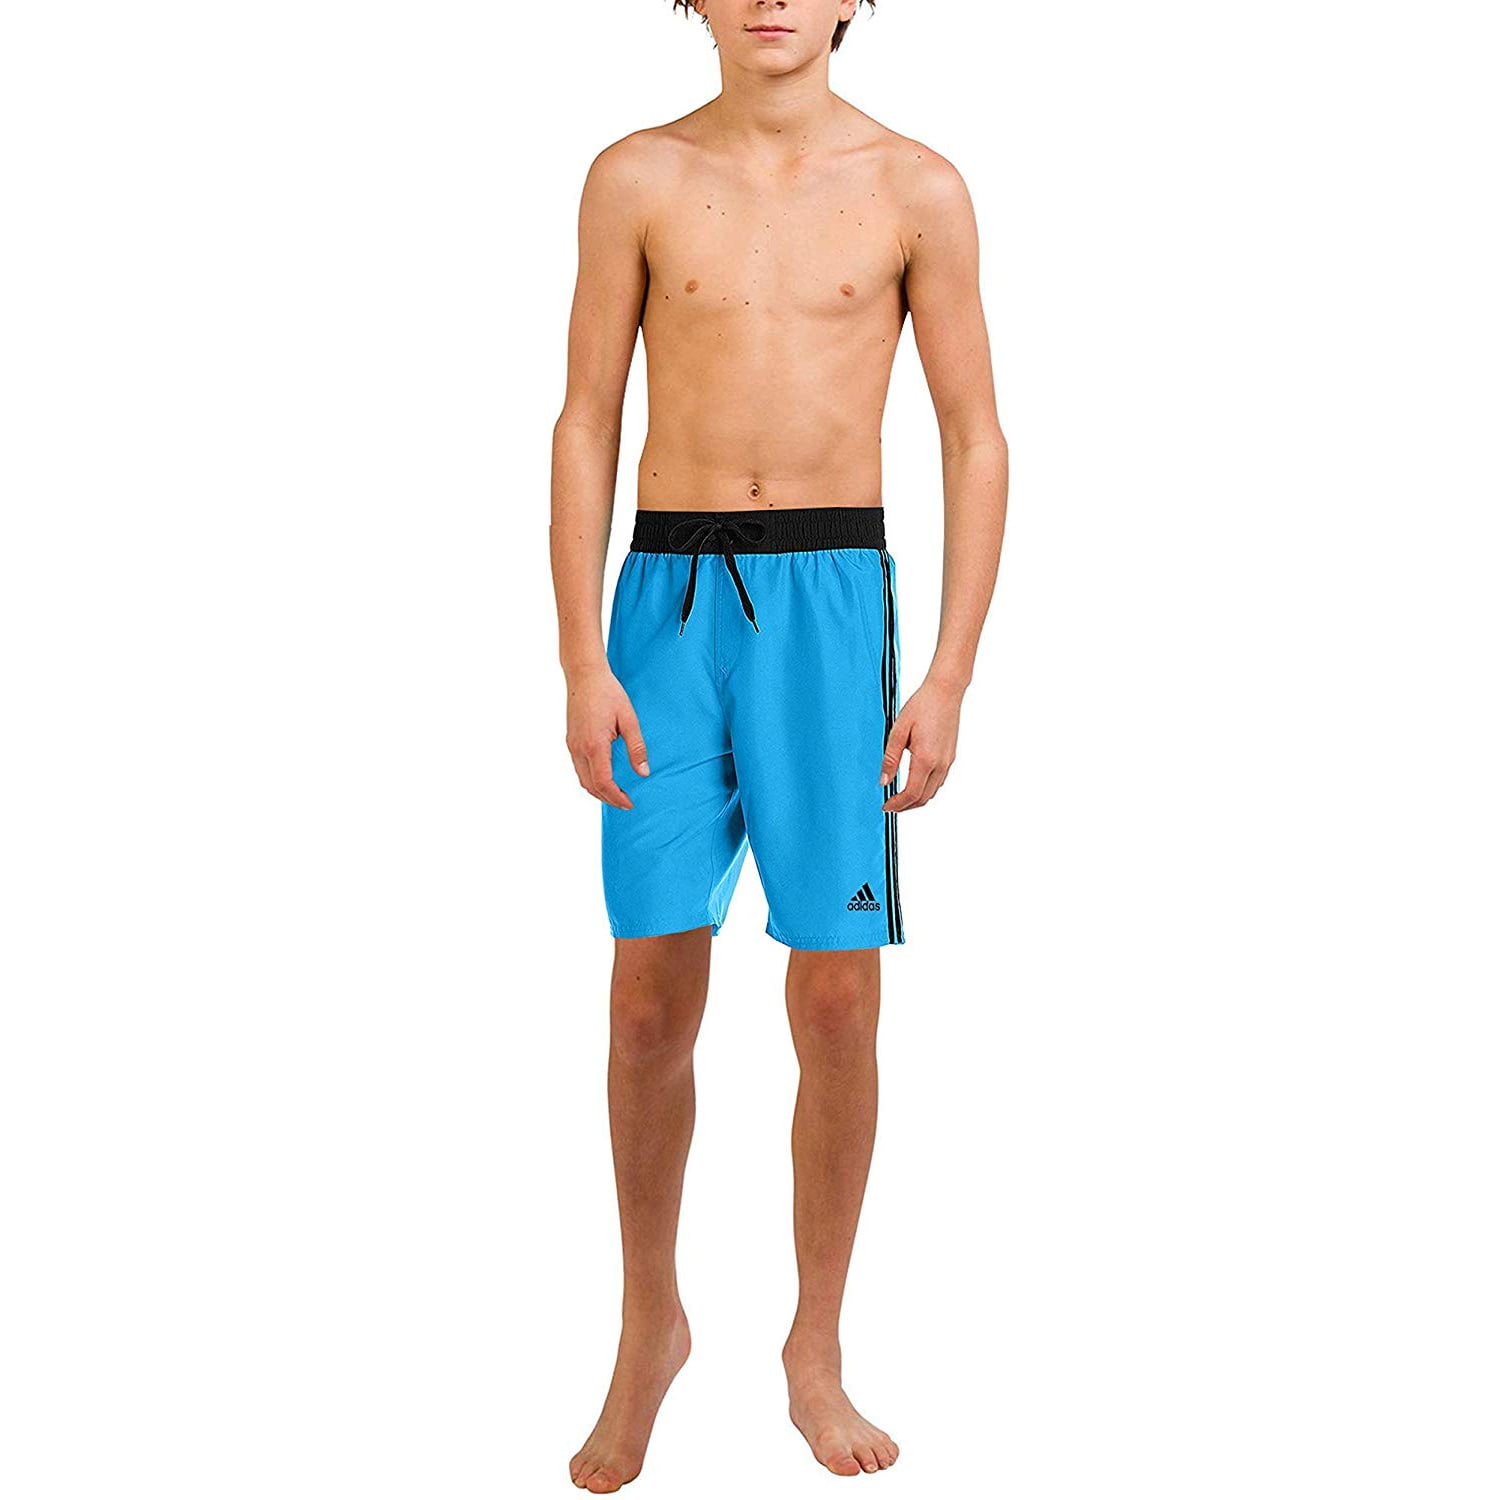 Adidas Boys Swim Trunks Boardshorts 